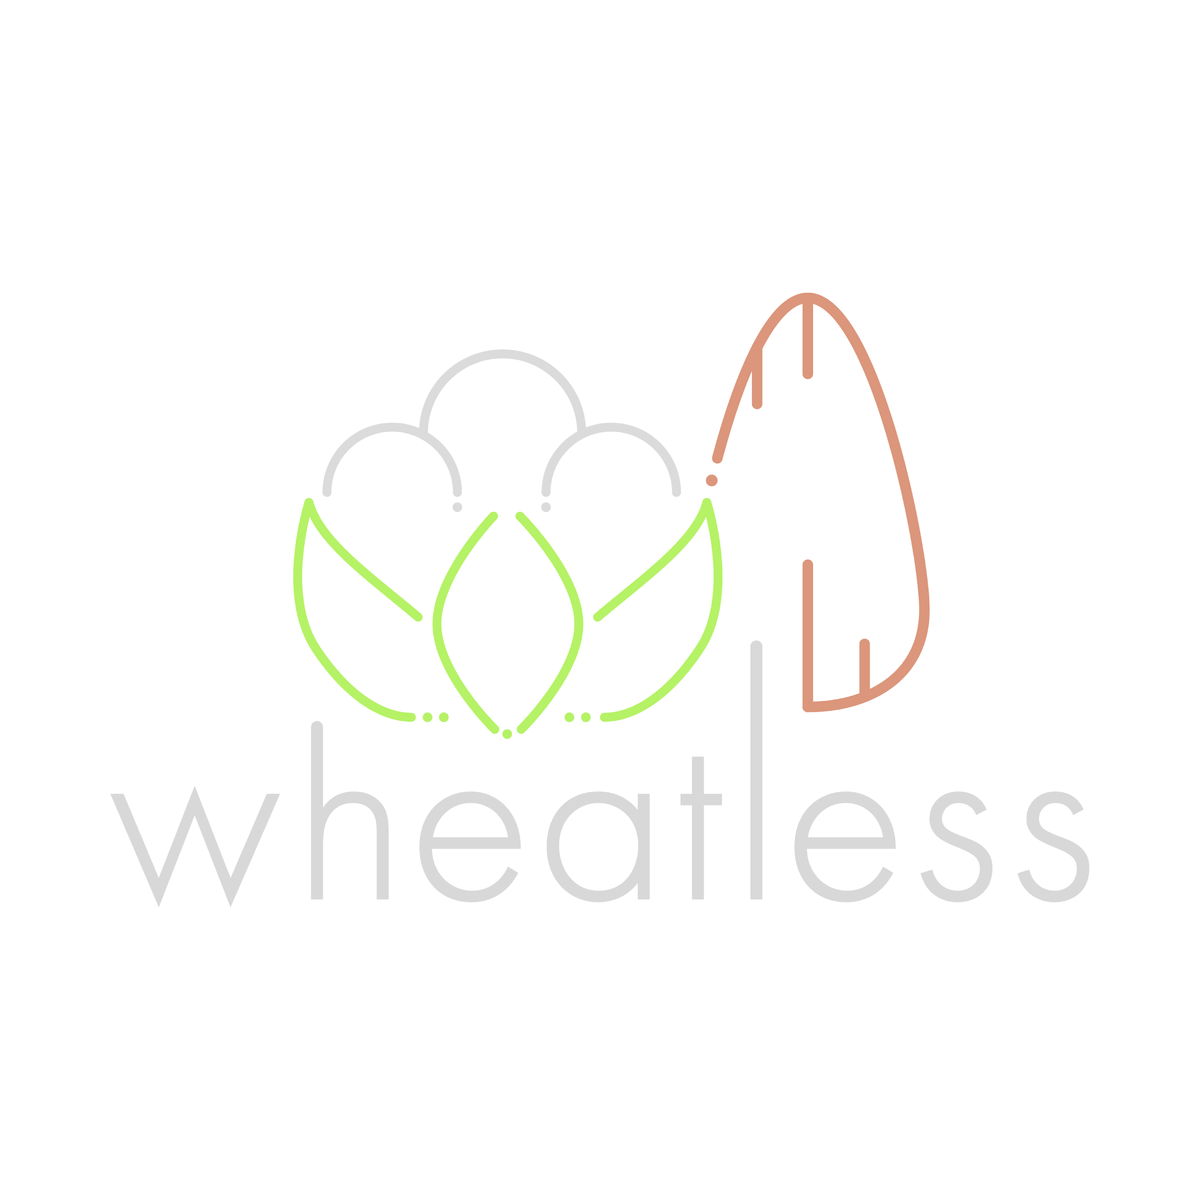 Wheatless Logo by Brooks Lane on Dribbble